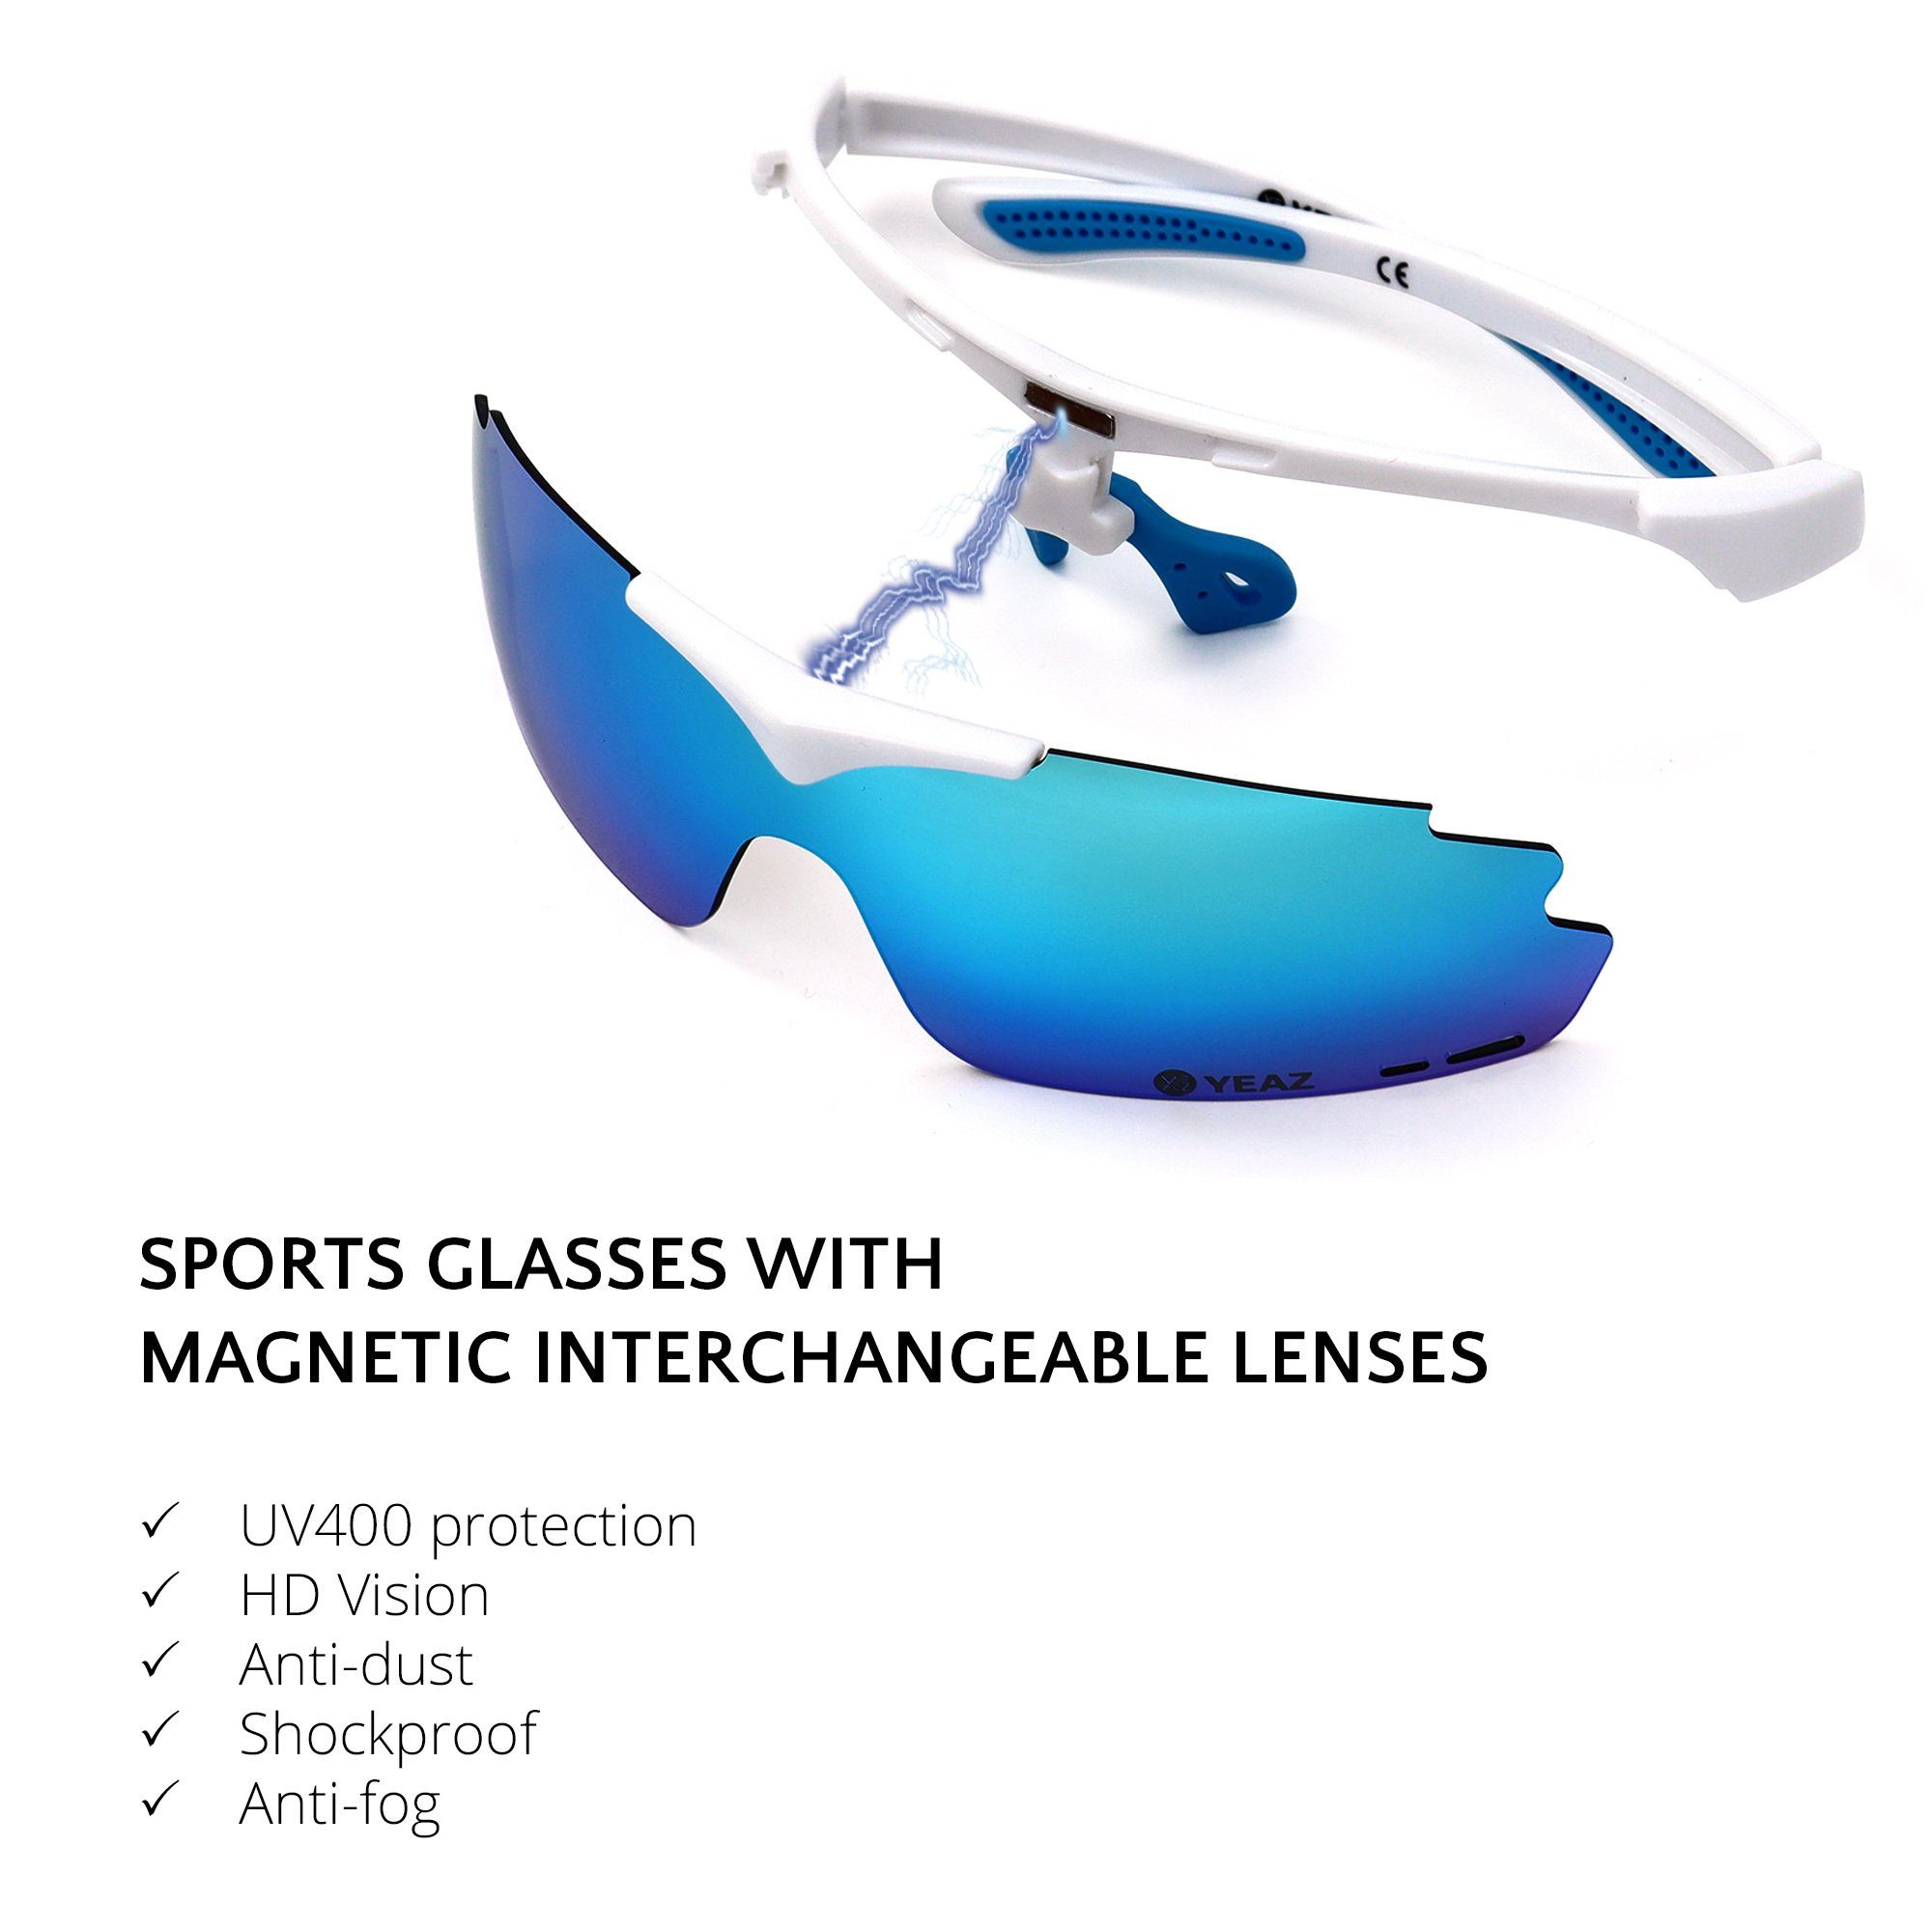 Sport-Sonnenbrille Magnetsystem magnet-sport-sonnenbrille, YEAZ SUNUP Sportbrille mit